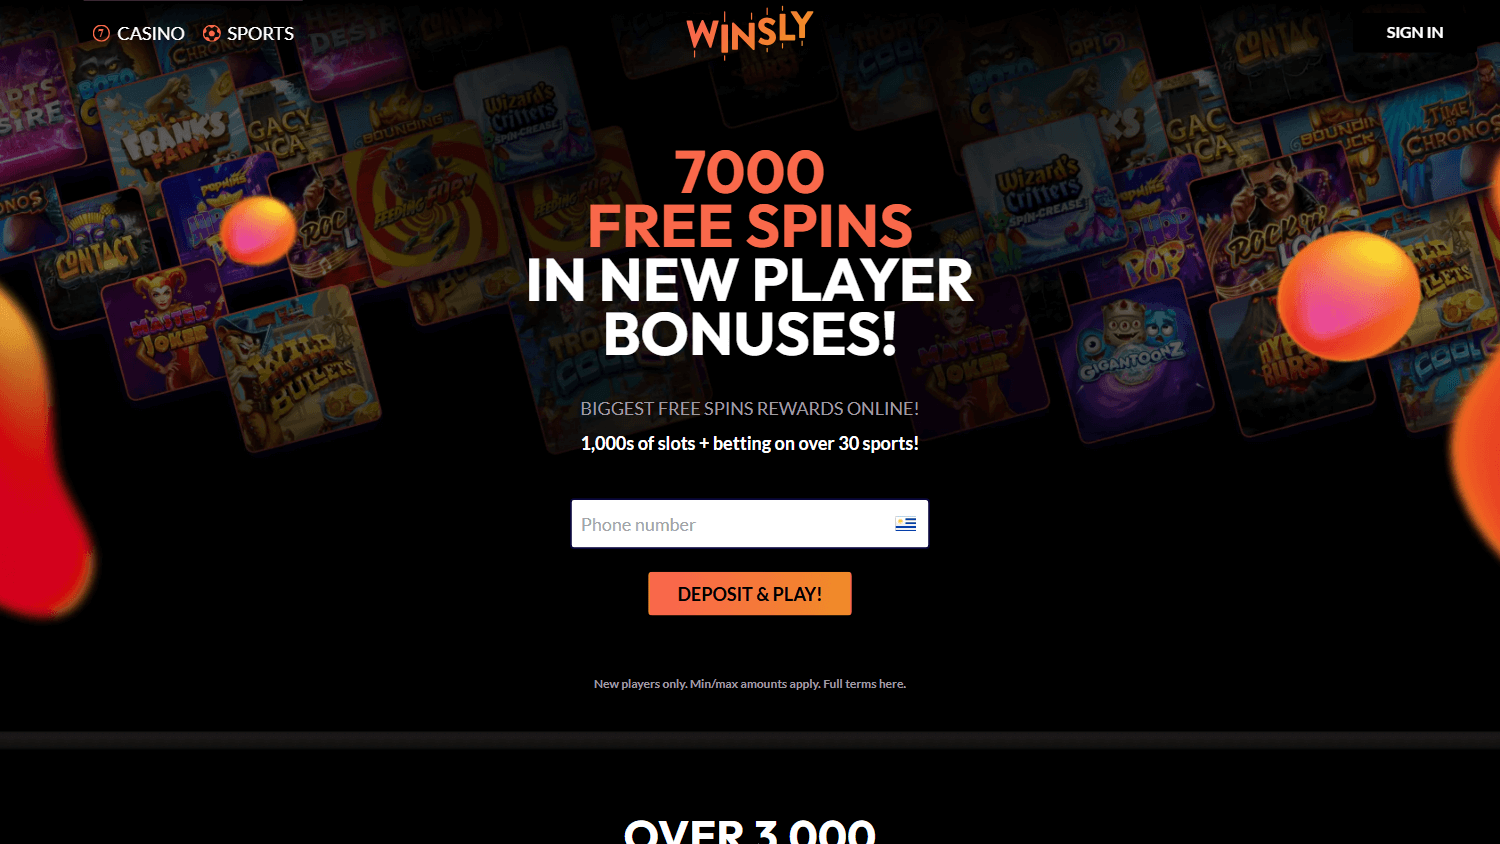 winsly_casino_homepage_desktop